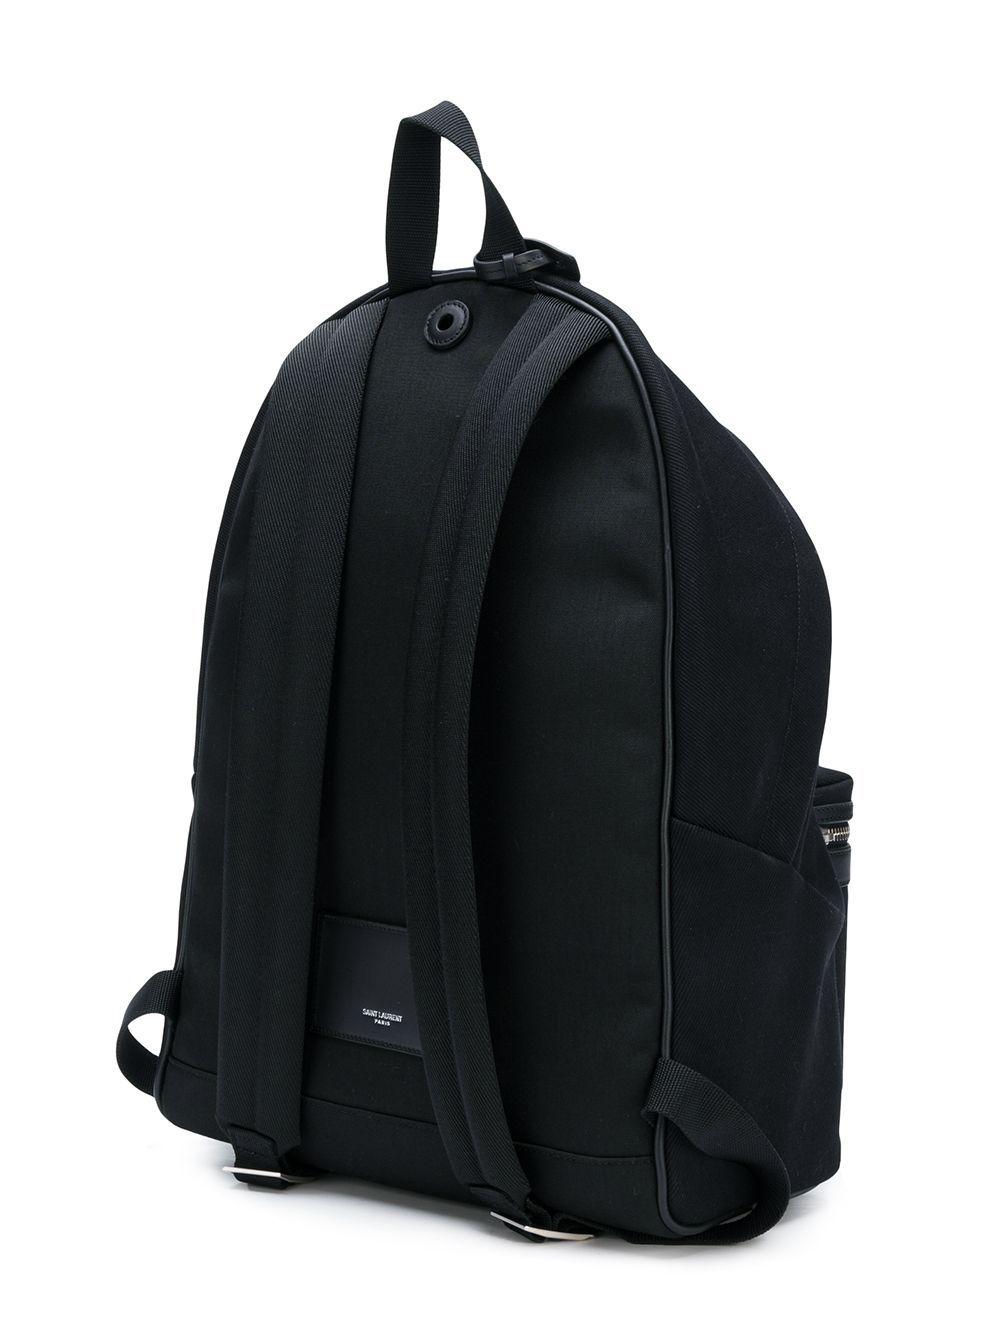 Men's Saint Laurent Bags & Backpacks